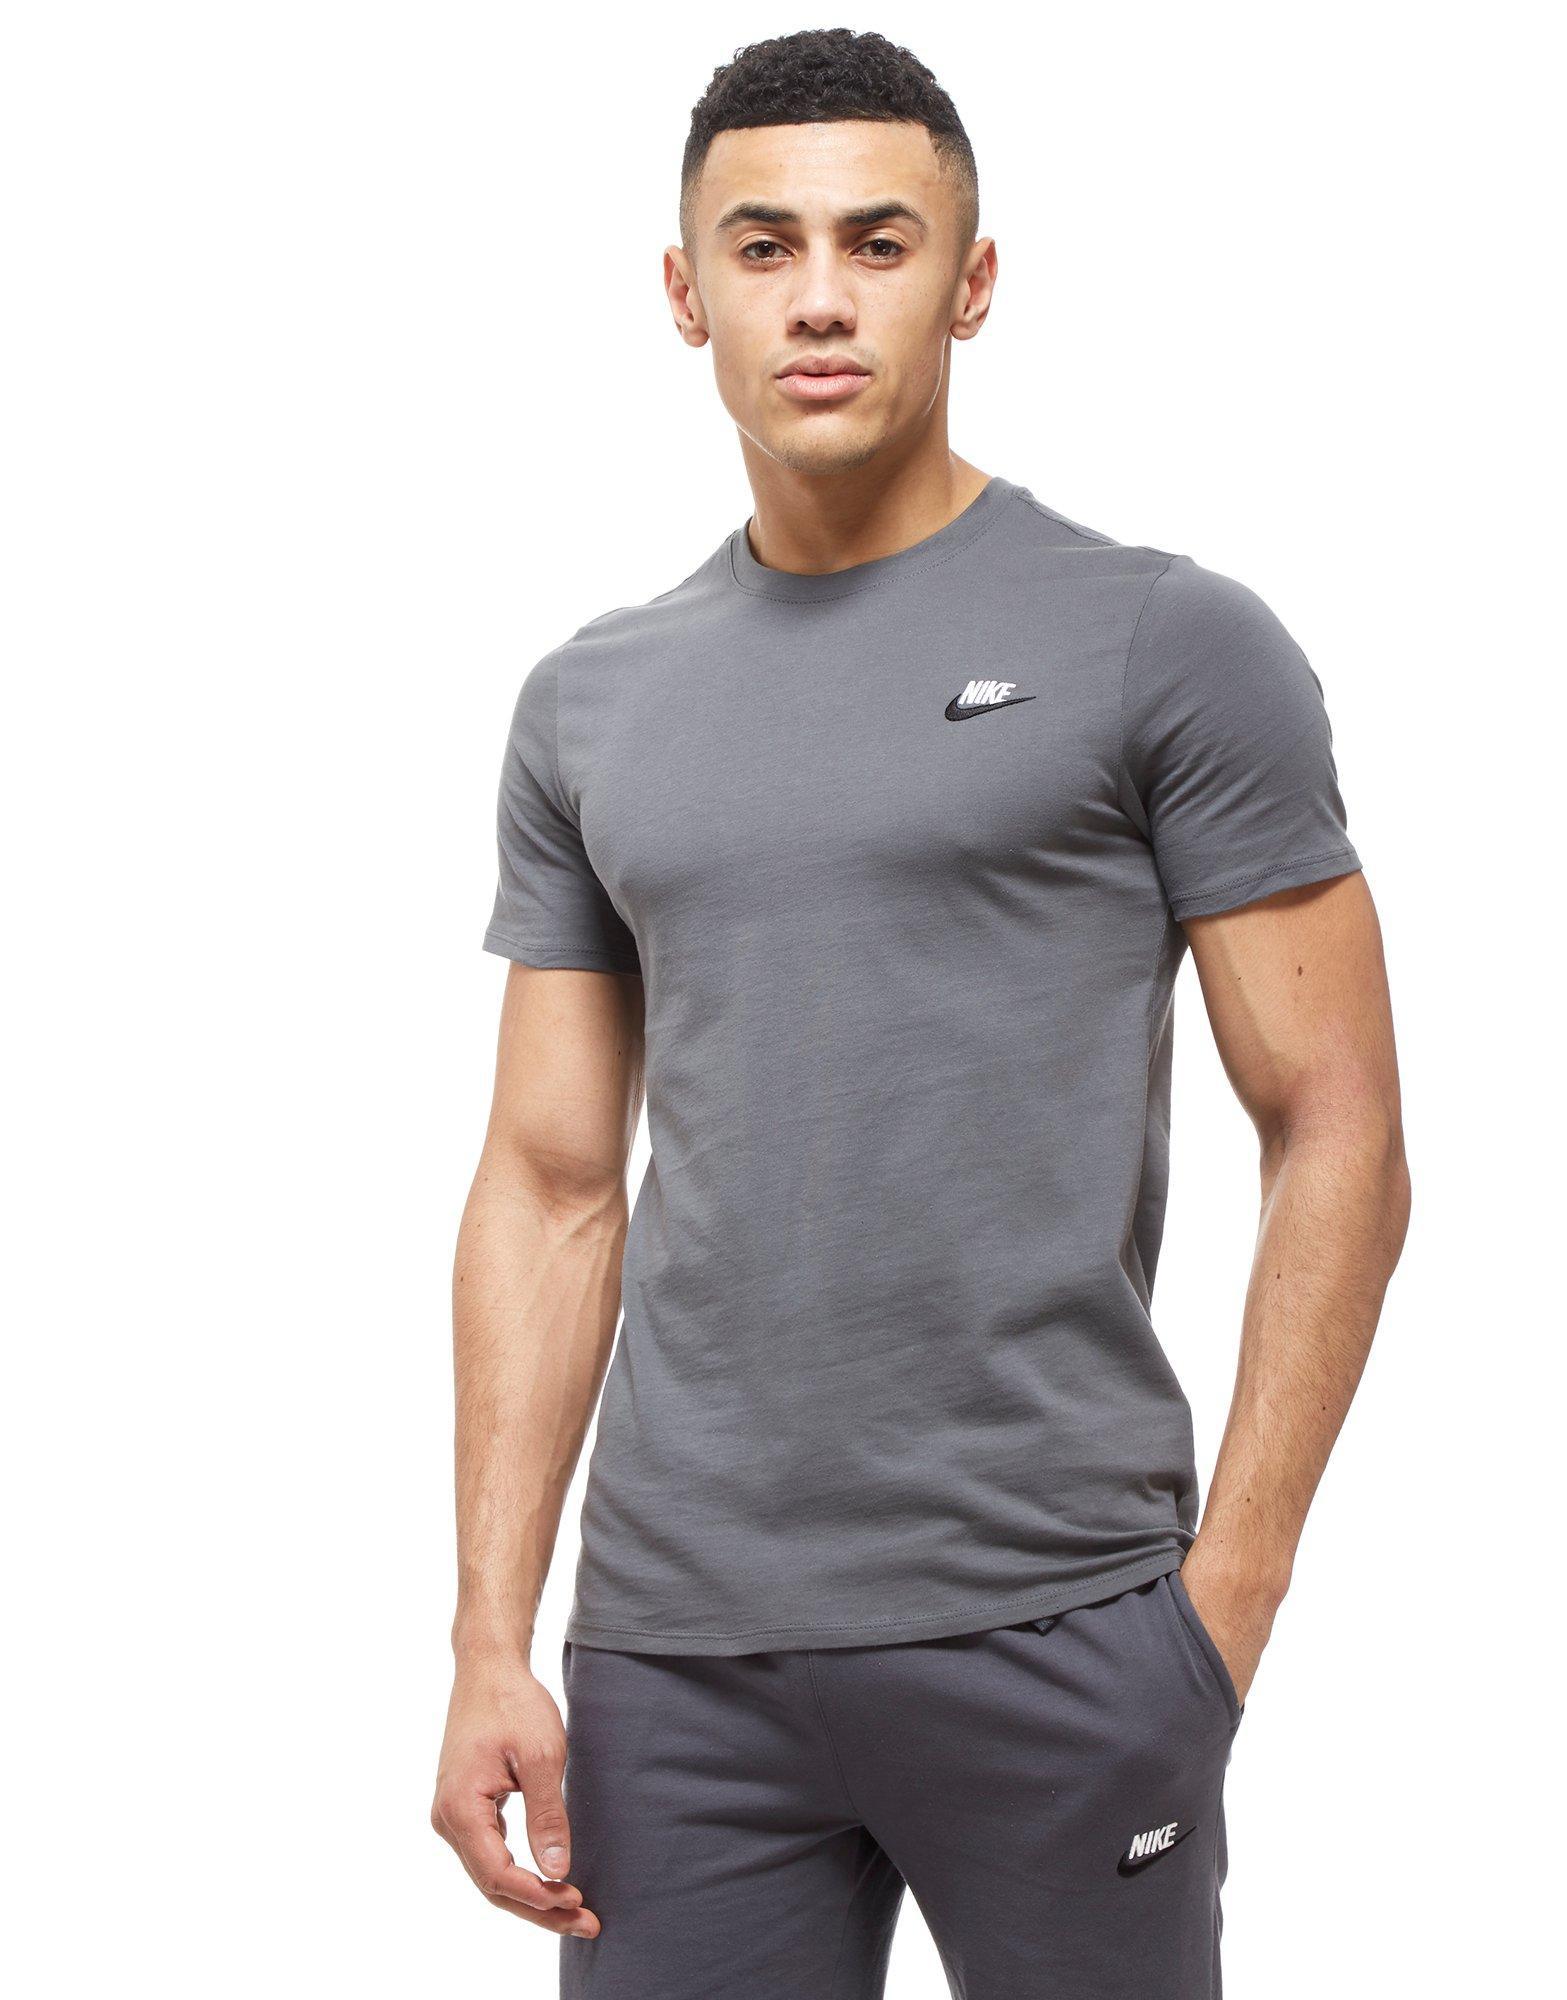 Nike Cotton Core 2 T-shirt in Dark Grey/Black (Gray) for Men - Lyst